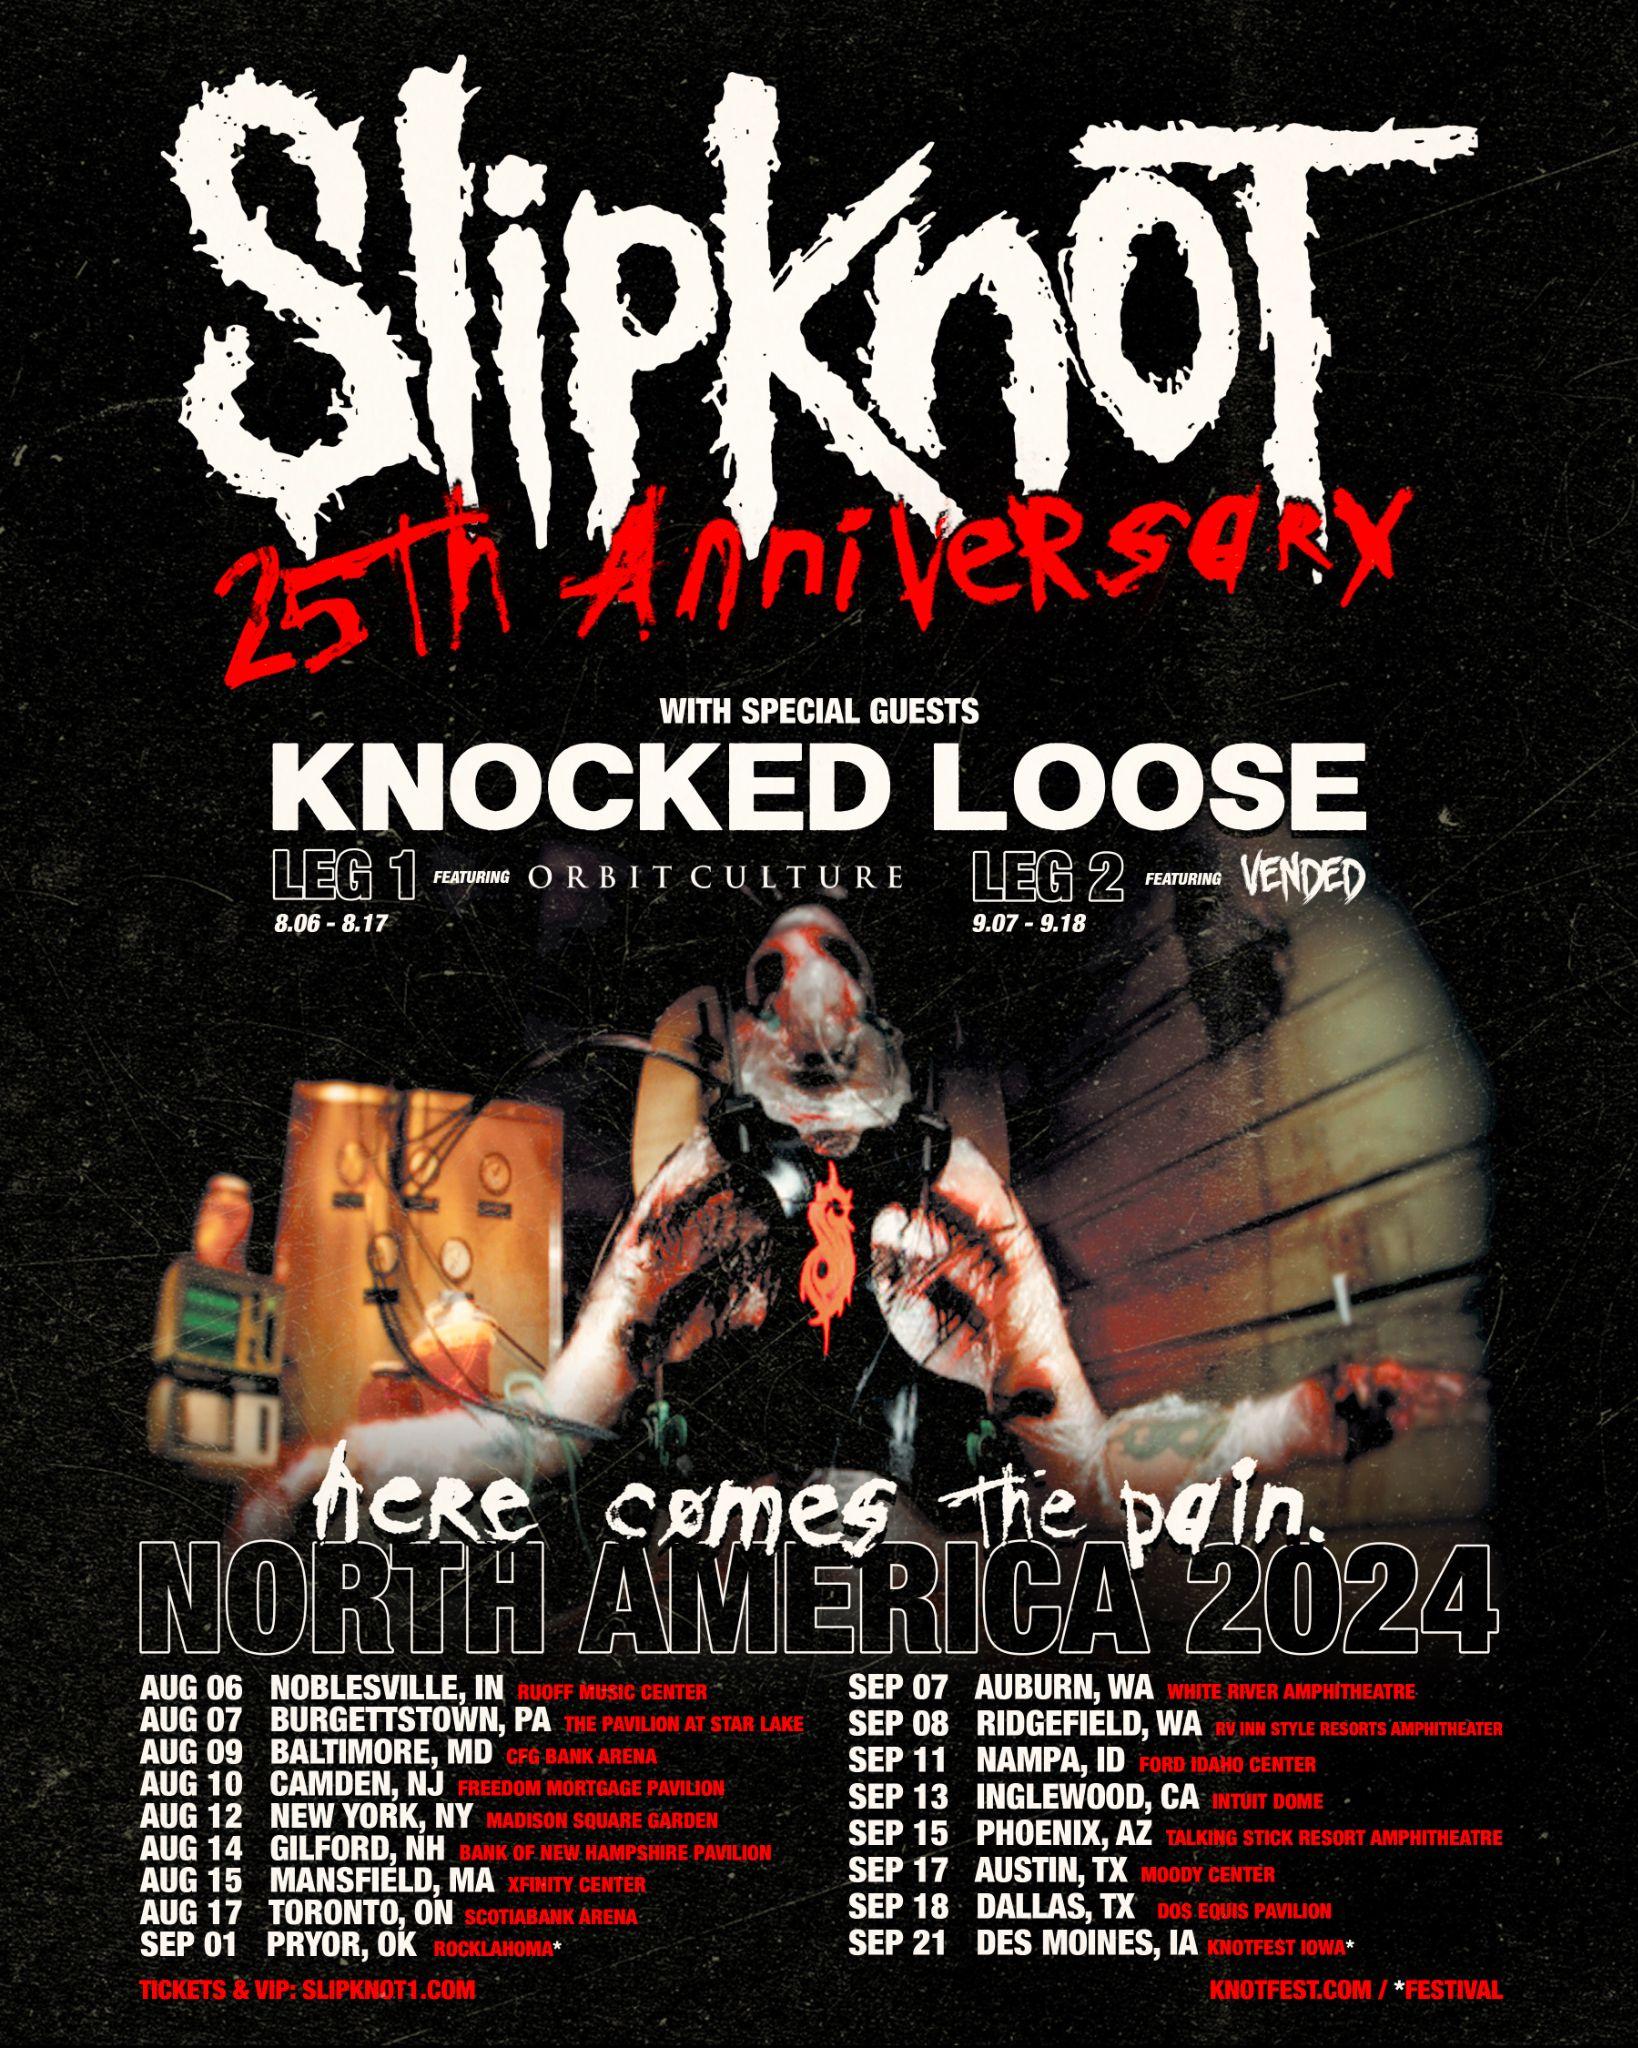 Slipknot 25th anniversary tour